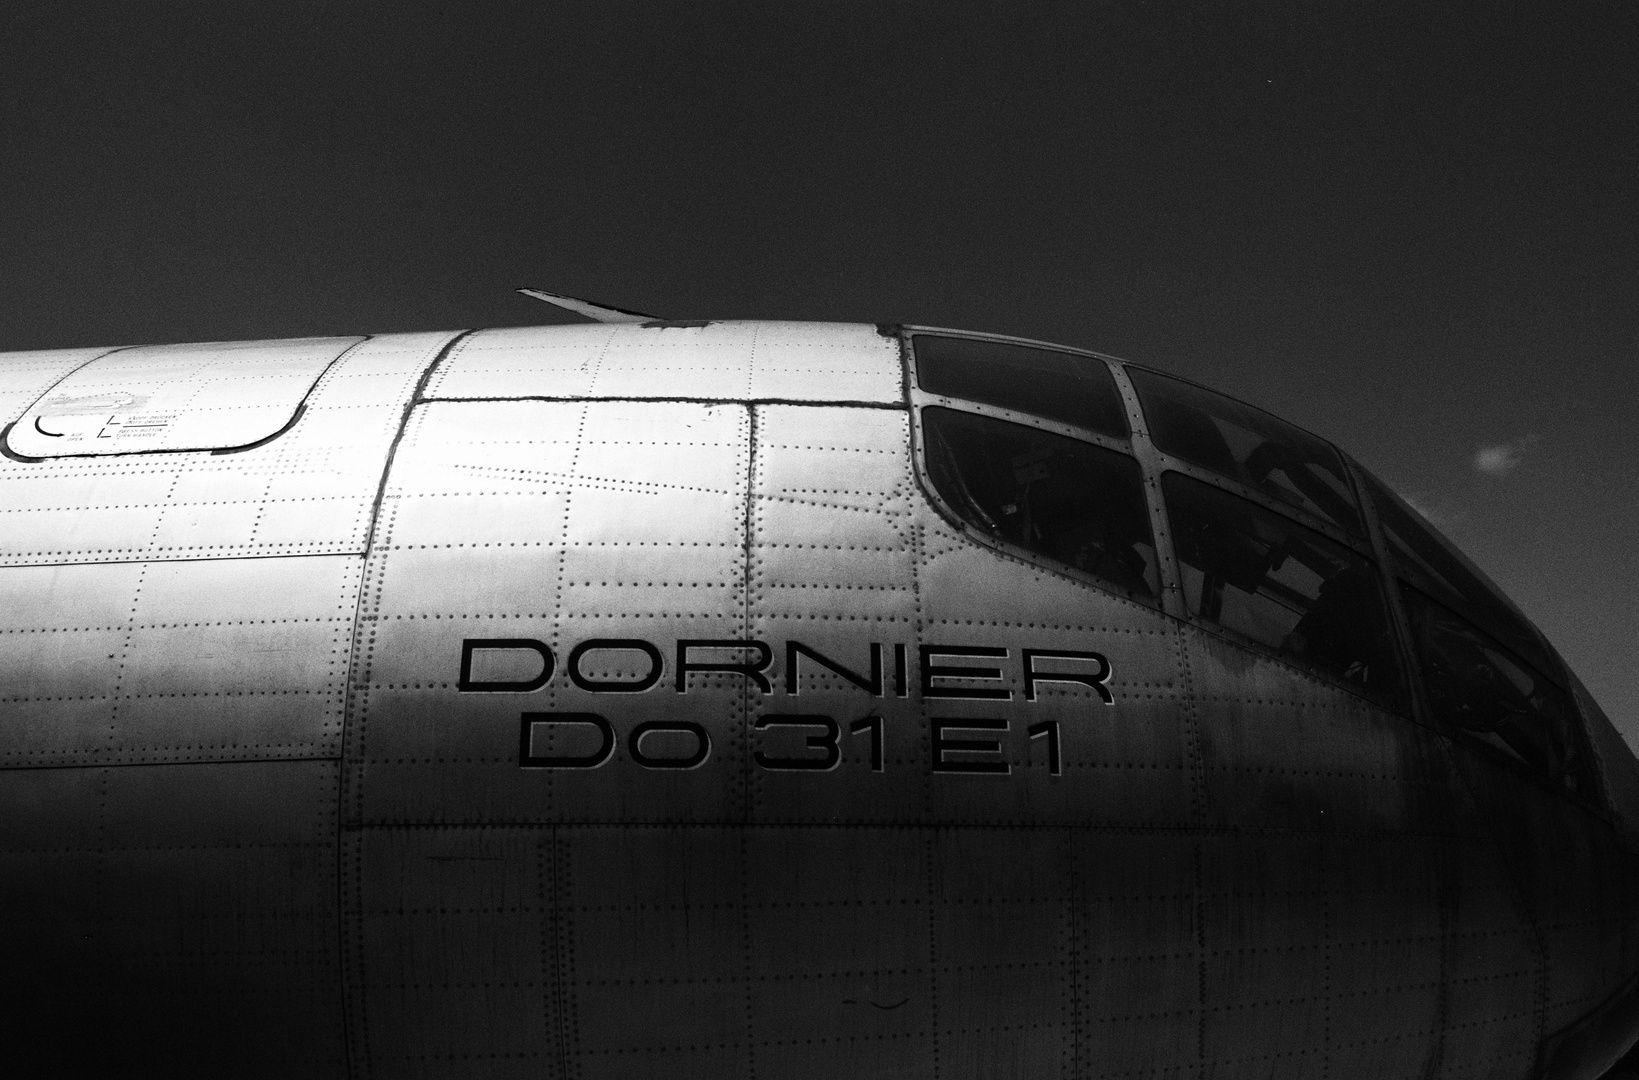 Dornier Flugzeug